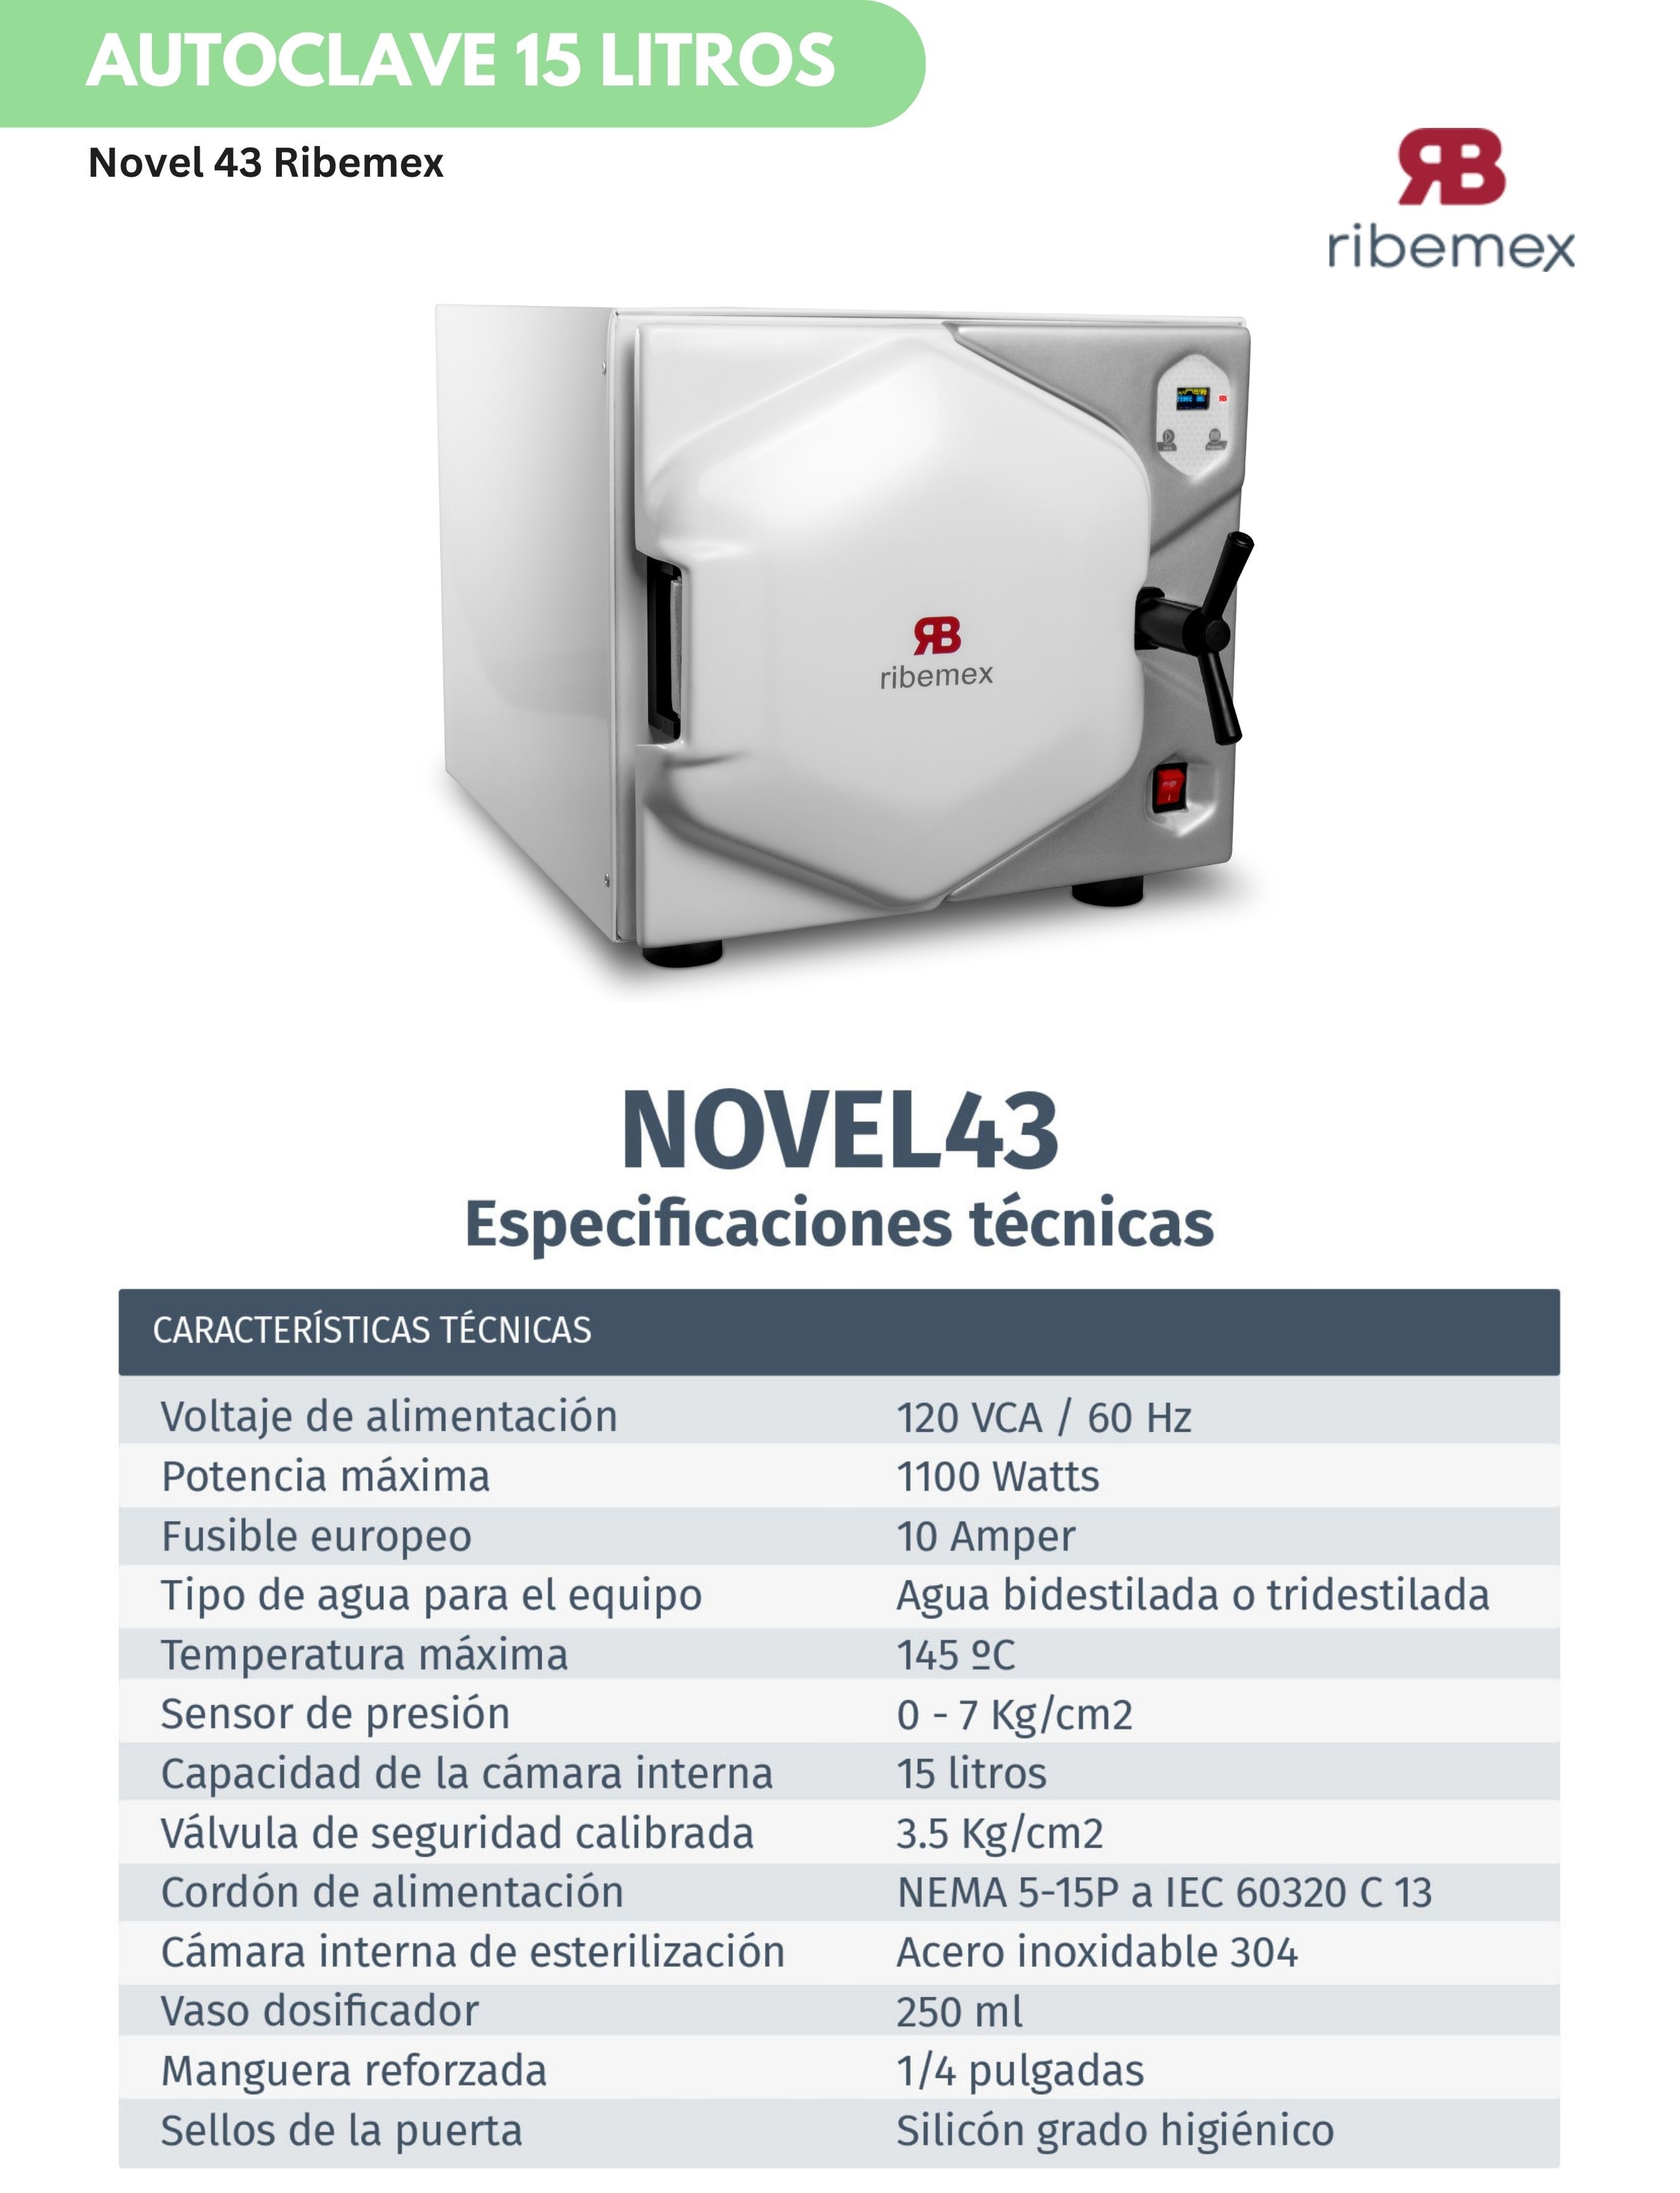 Autoclave 15 Litros Novel 43 Ribemex Orthosign